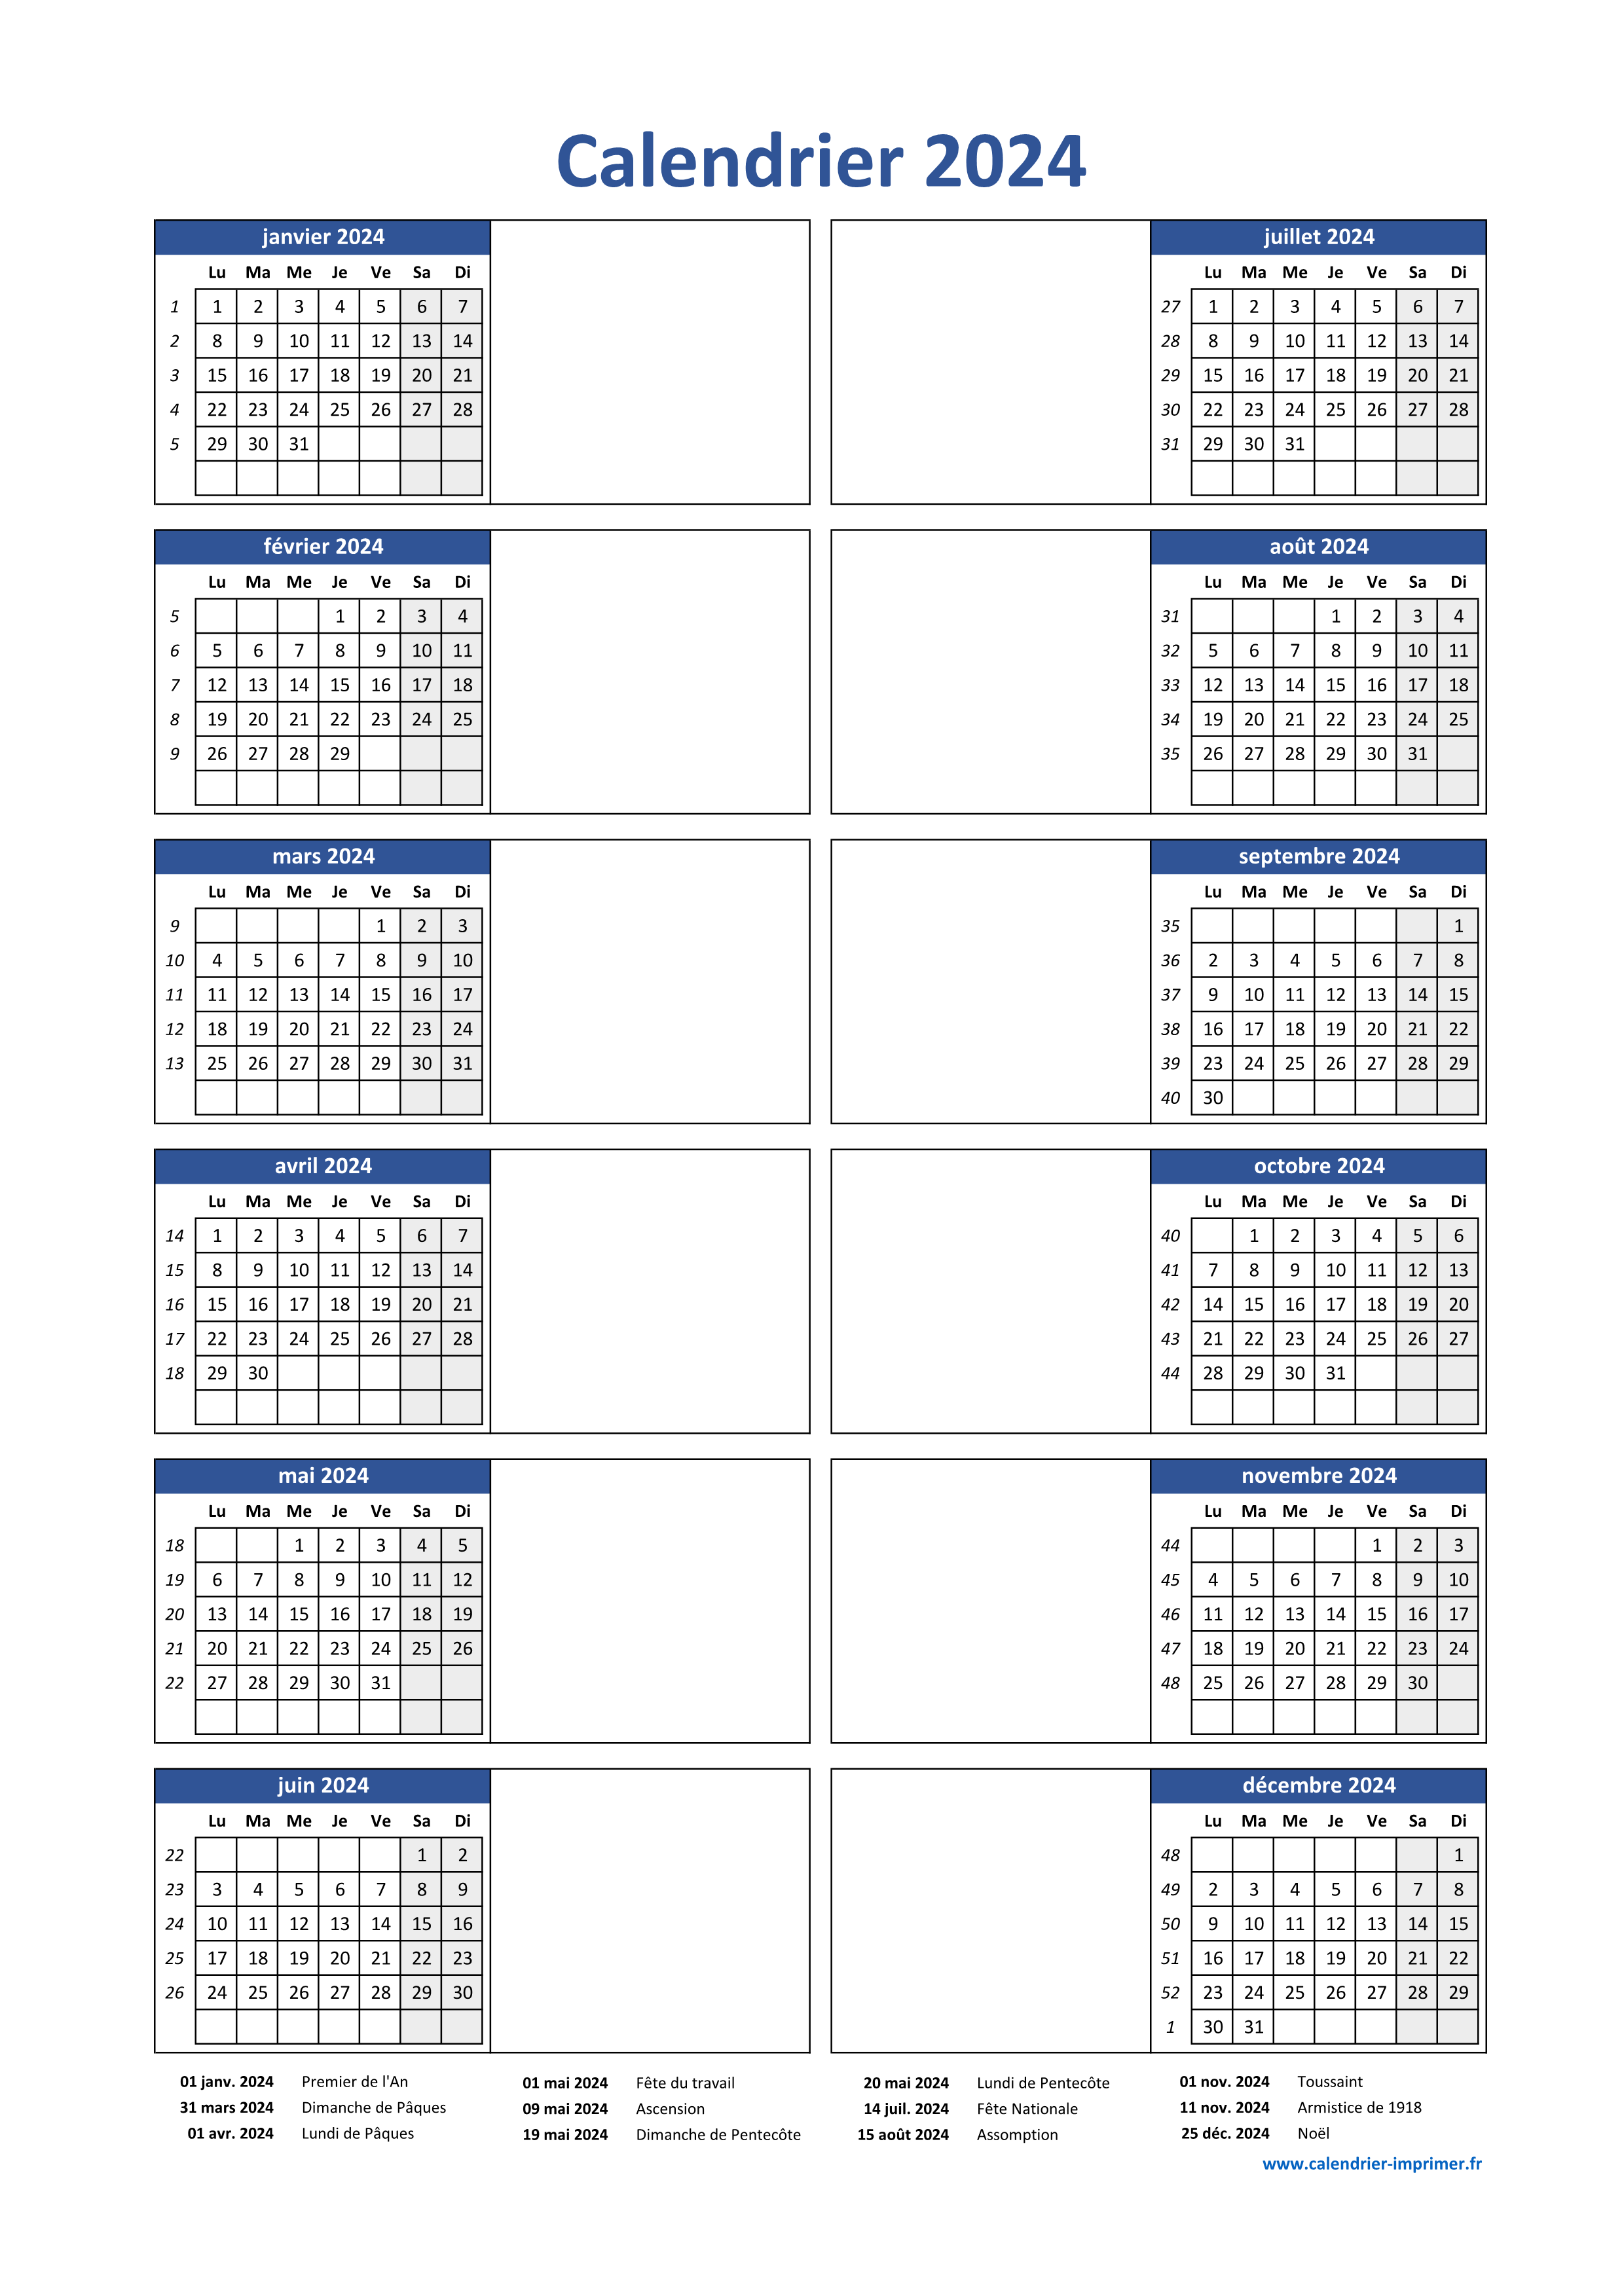 https://www.calendrier-imprimer.fr/calendriers/2024/calendrier-annuel-2024-vertical-2-colonnes.png